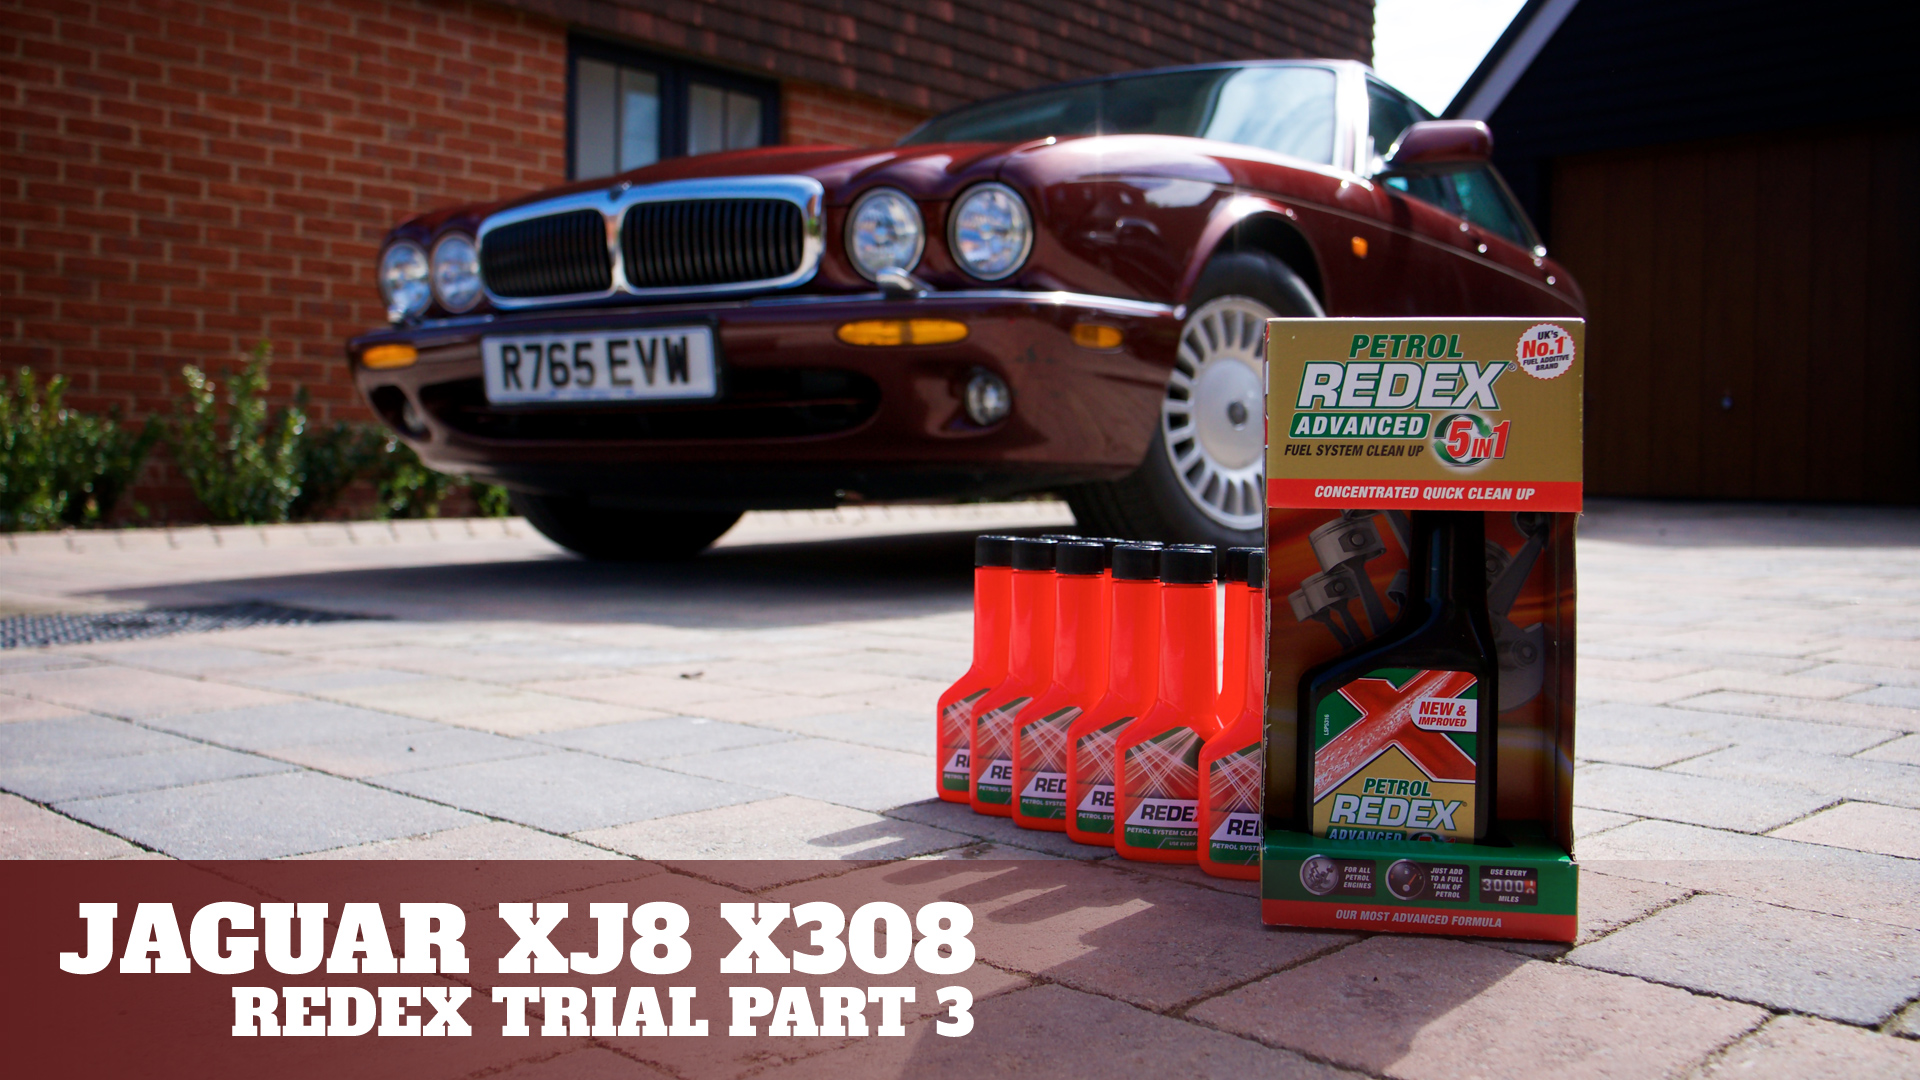 Take to the Road Jaguar XJ8 Redex Trial